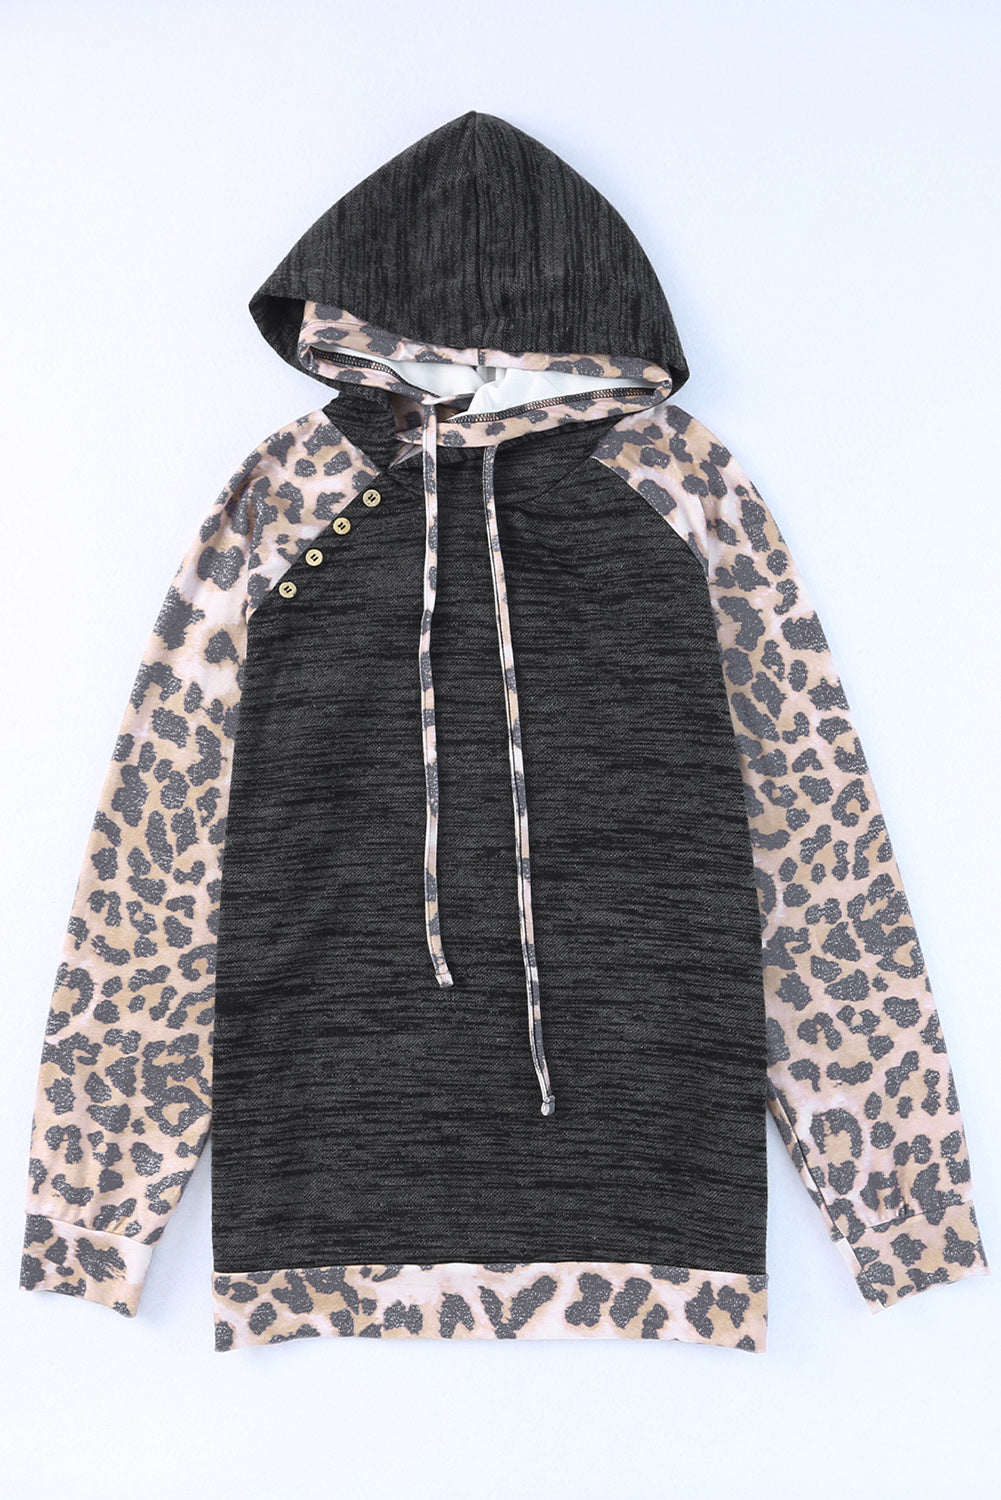 Brushed Leopard Contrast Hoodie Sweatshirts & Hoodies JT's Designer Fashion